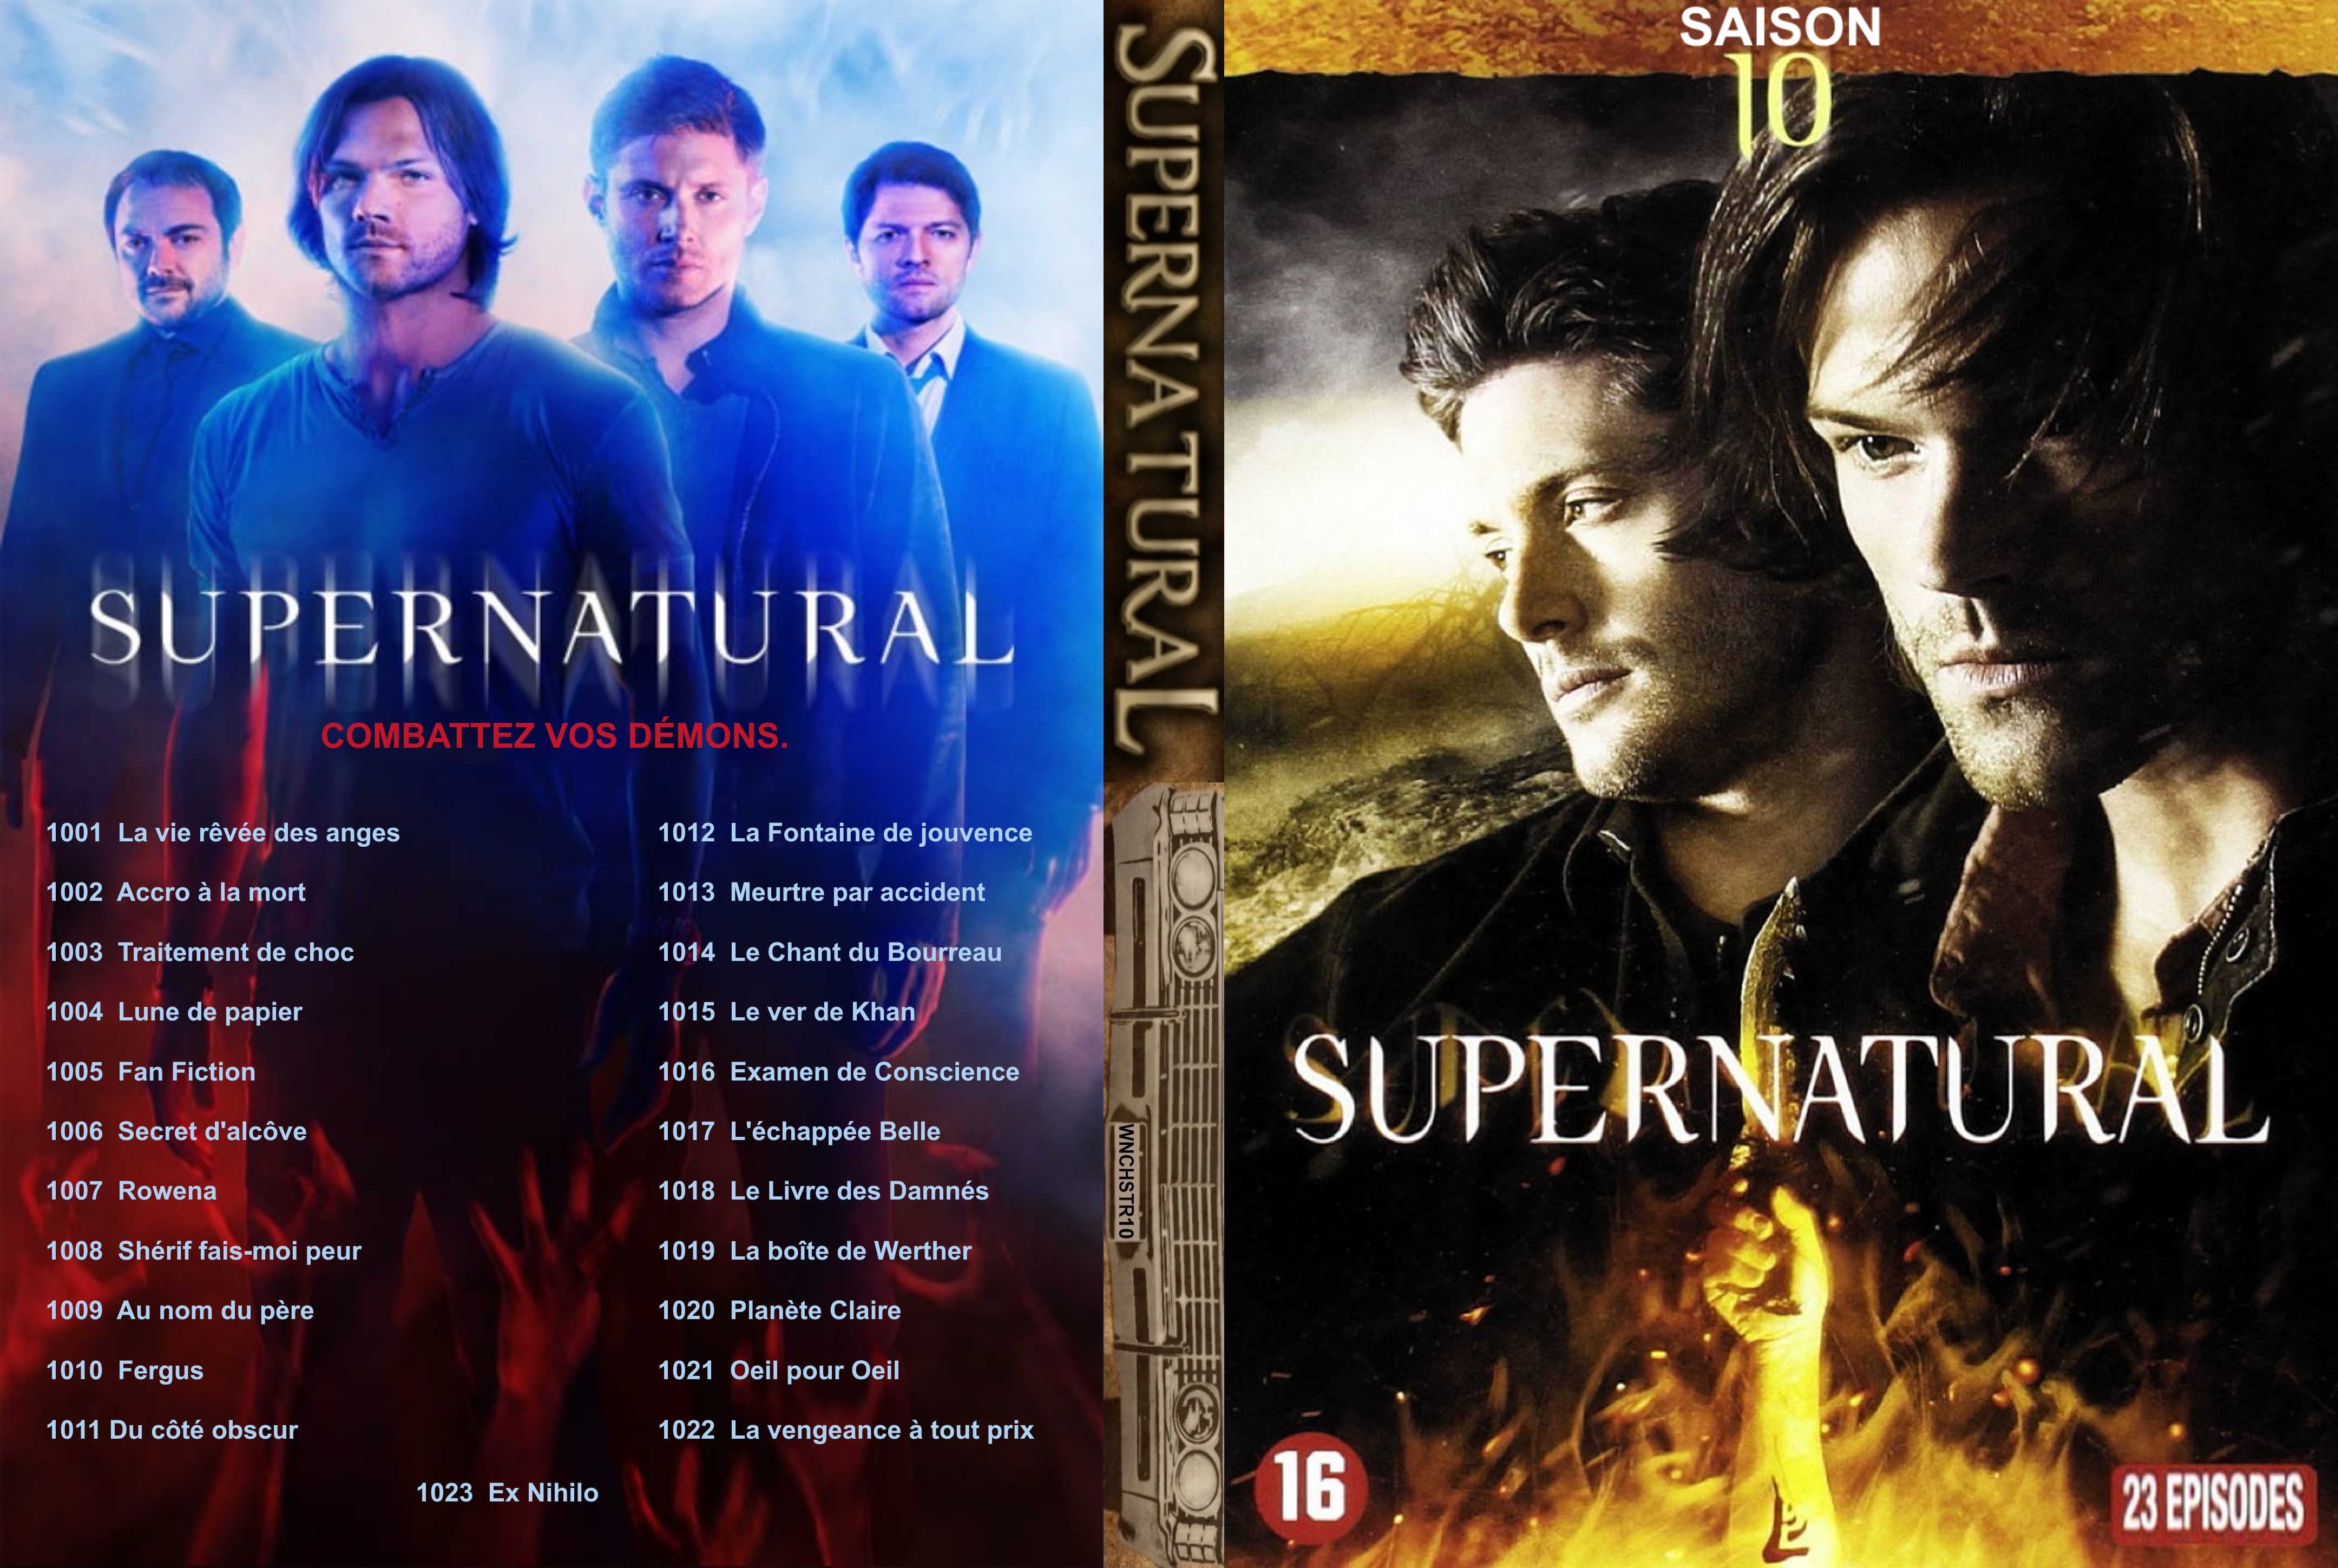 Jaquette DVD Supernatural Saison 10 custom